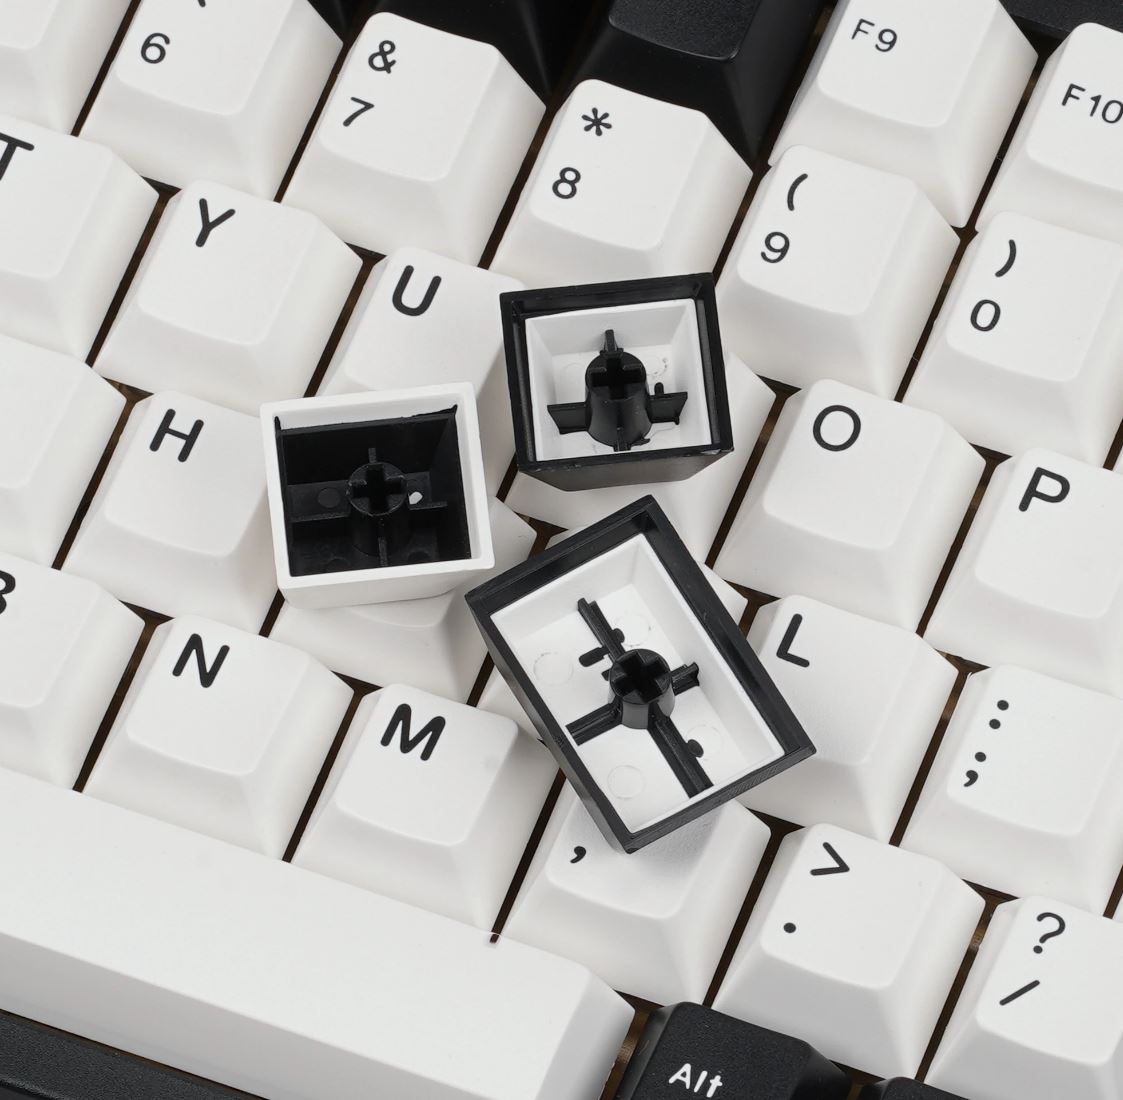 EPBT Black & White ABS Doubleshot Keycaps Set